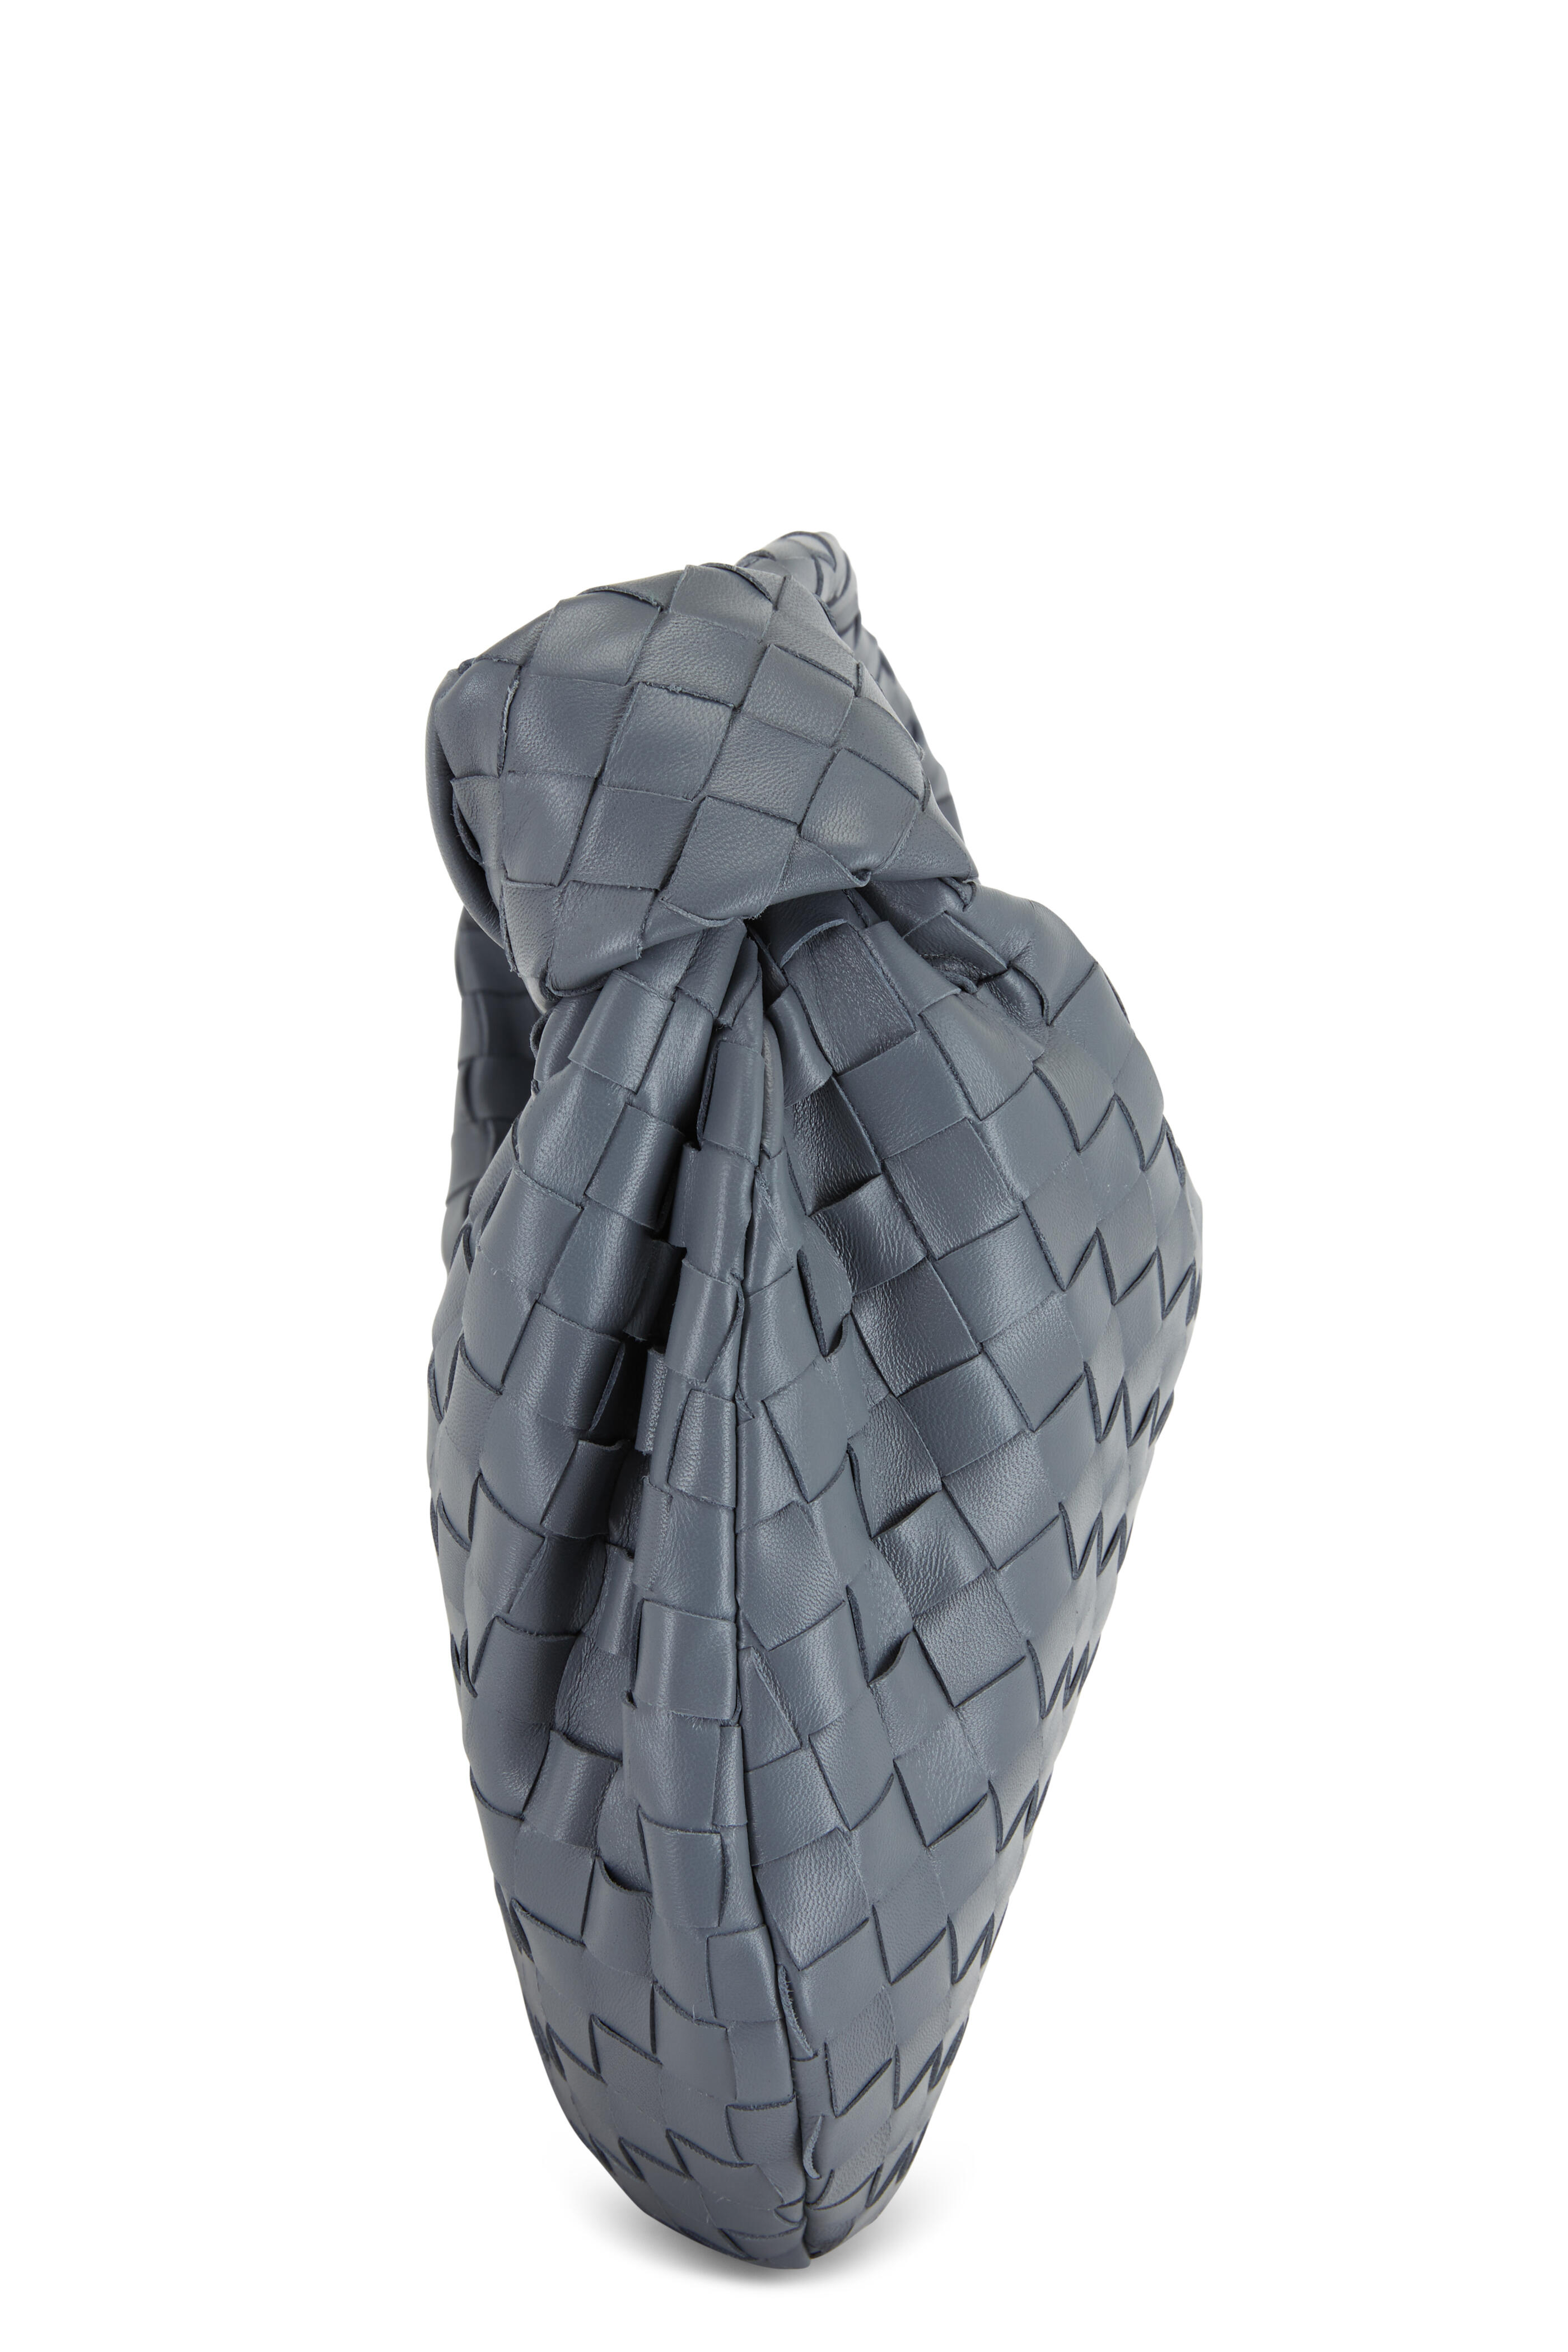 Bottega Veneta Women's Teen Jodie Space Blue Woven Leather Bag | by Mitchell Stores